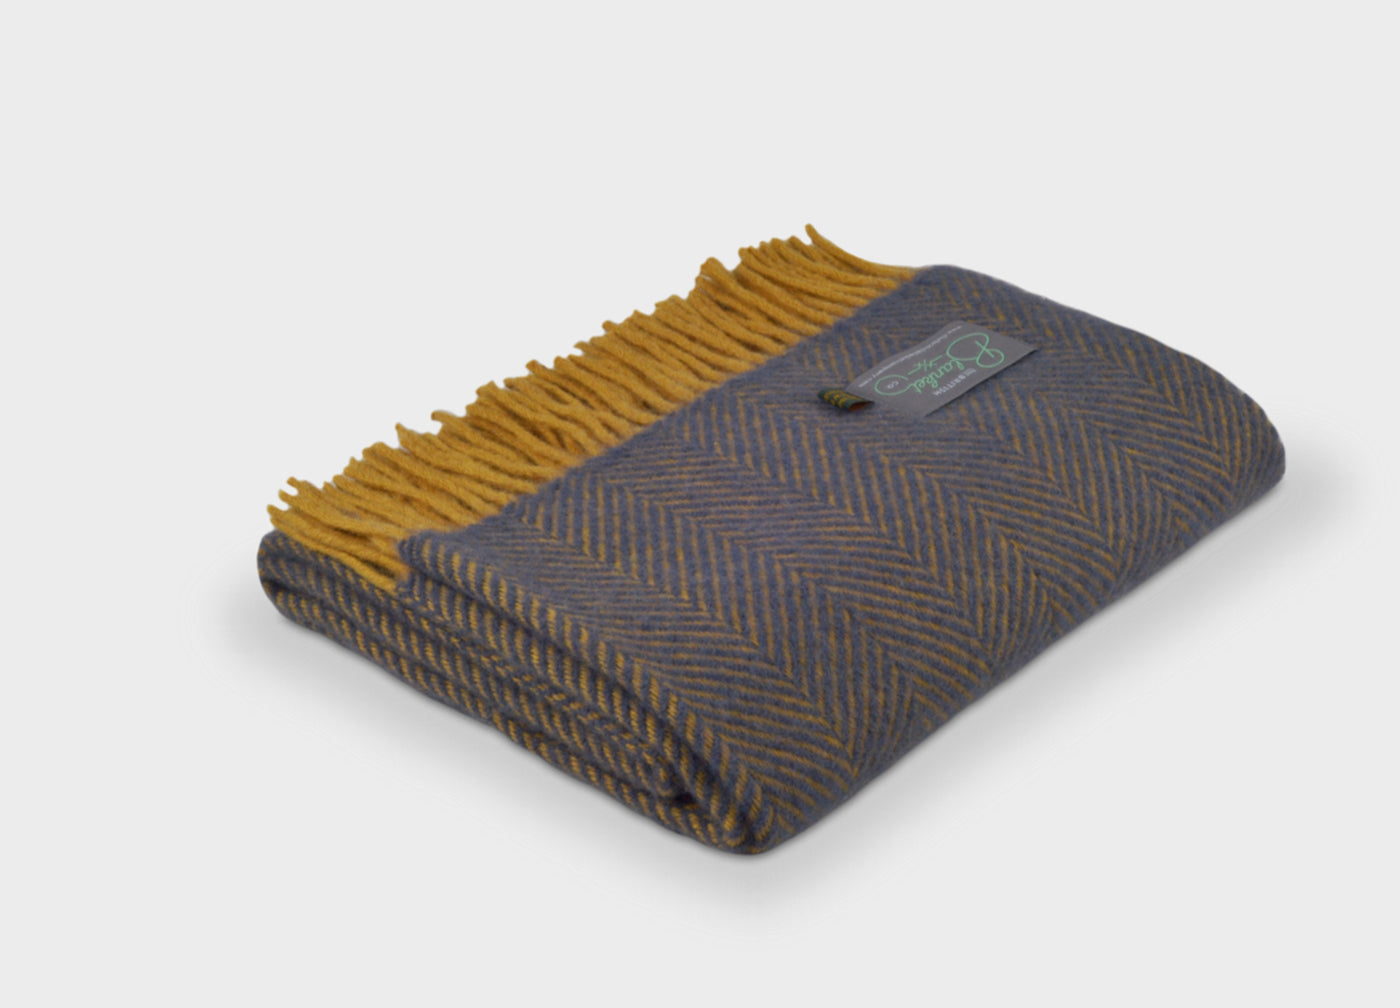 Folded blue and yellow herringbone wool throw by The British Blanket Company